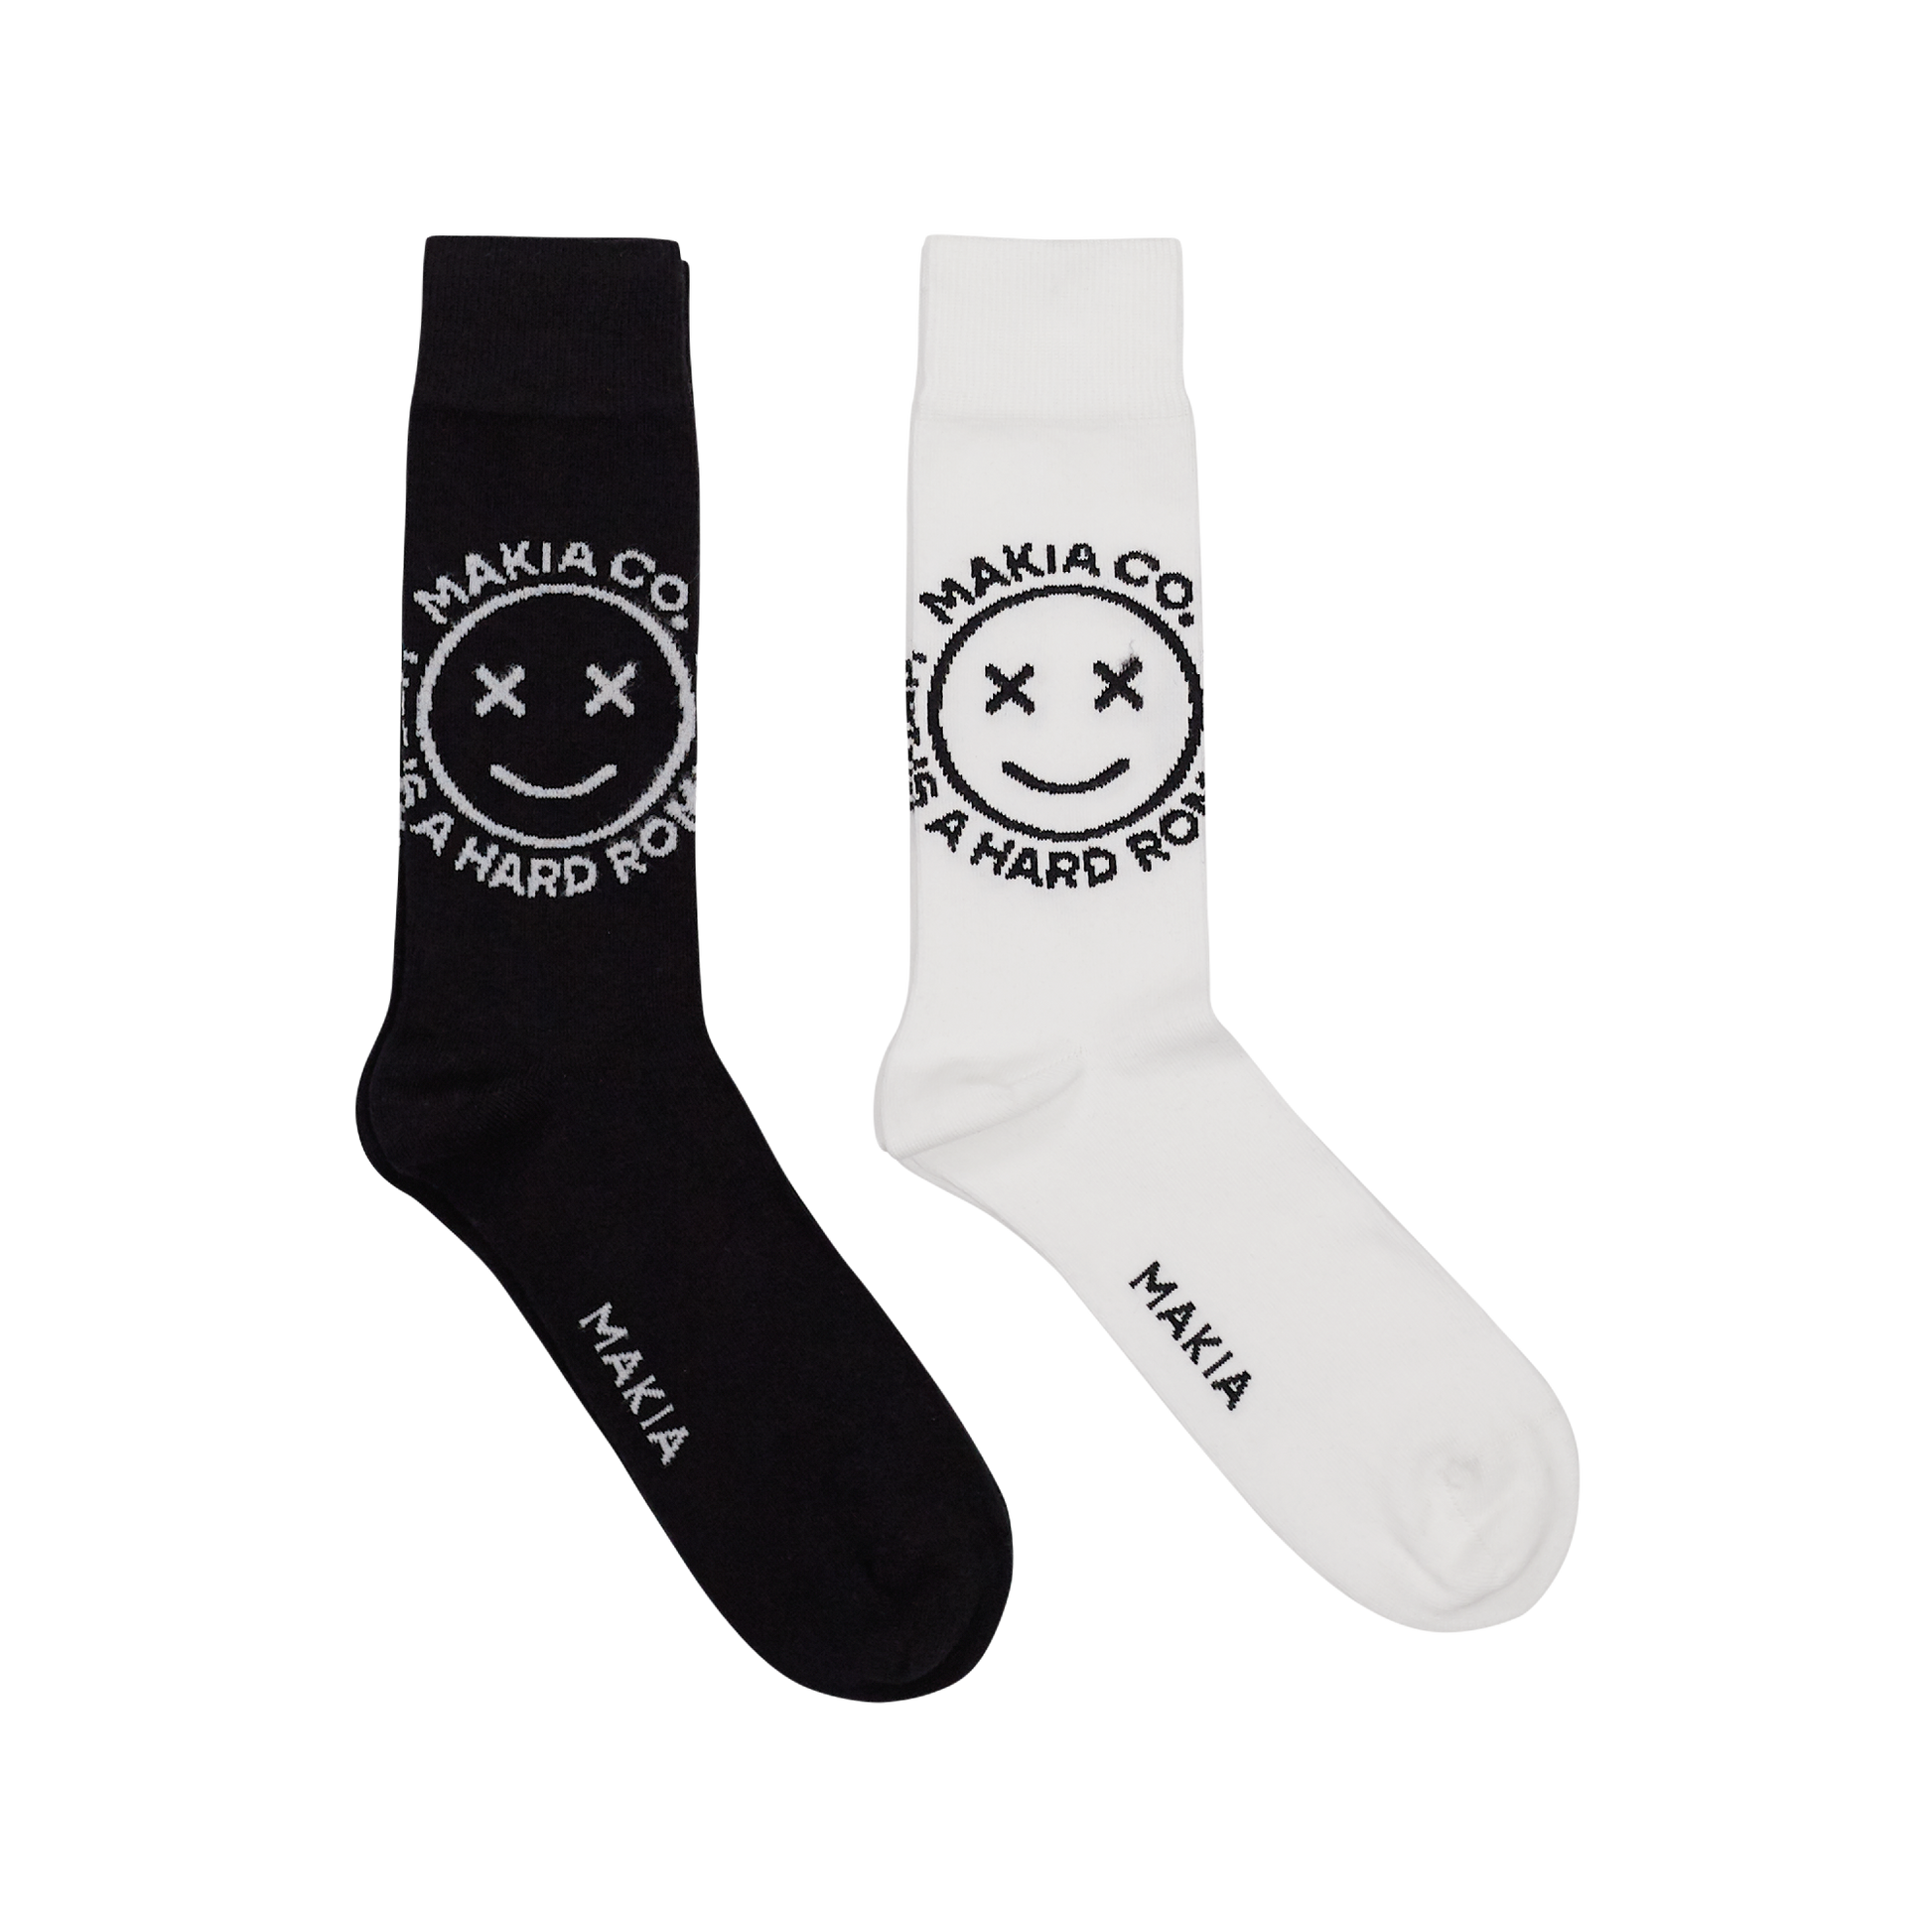 Dizzy two pack of socks black/white | MAKIA